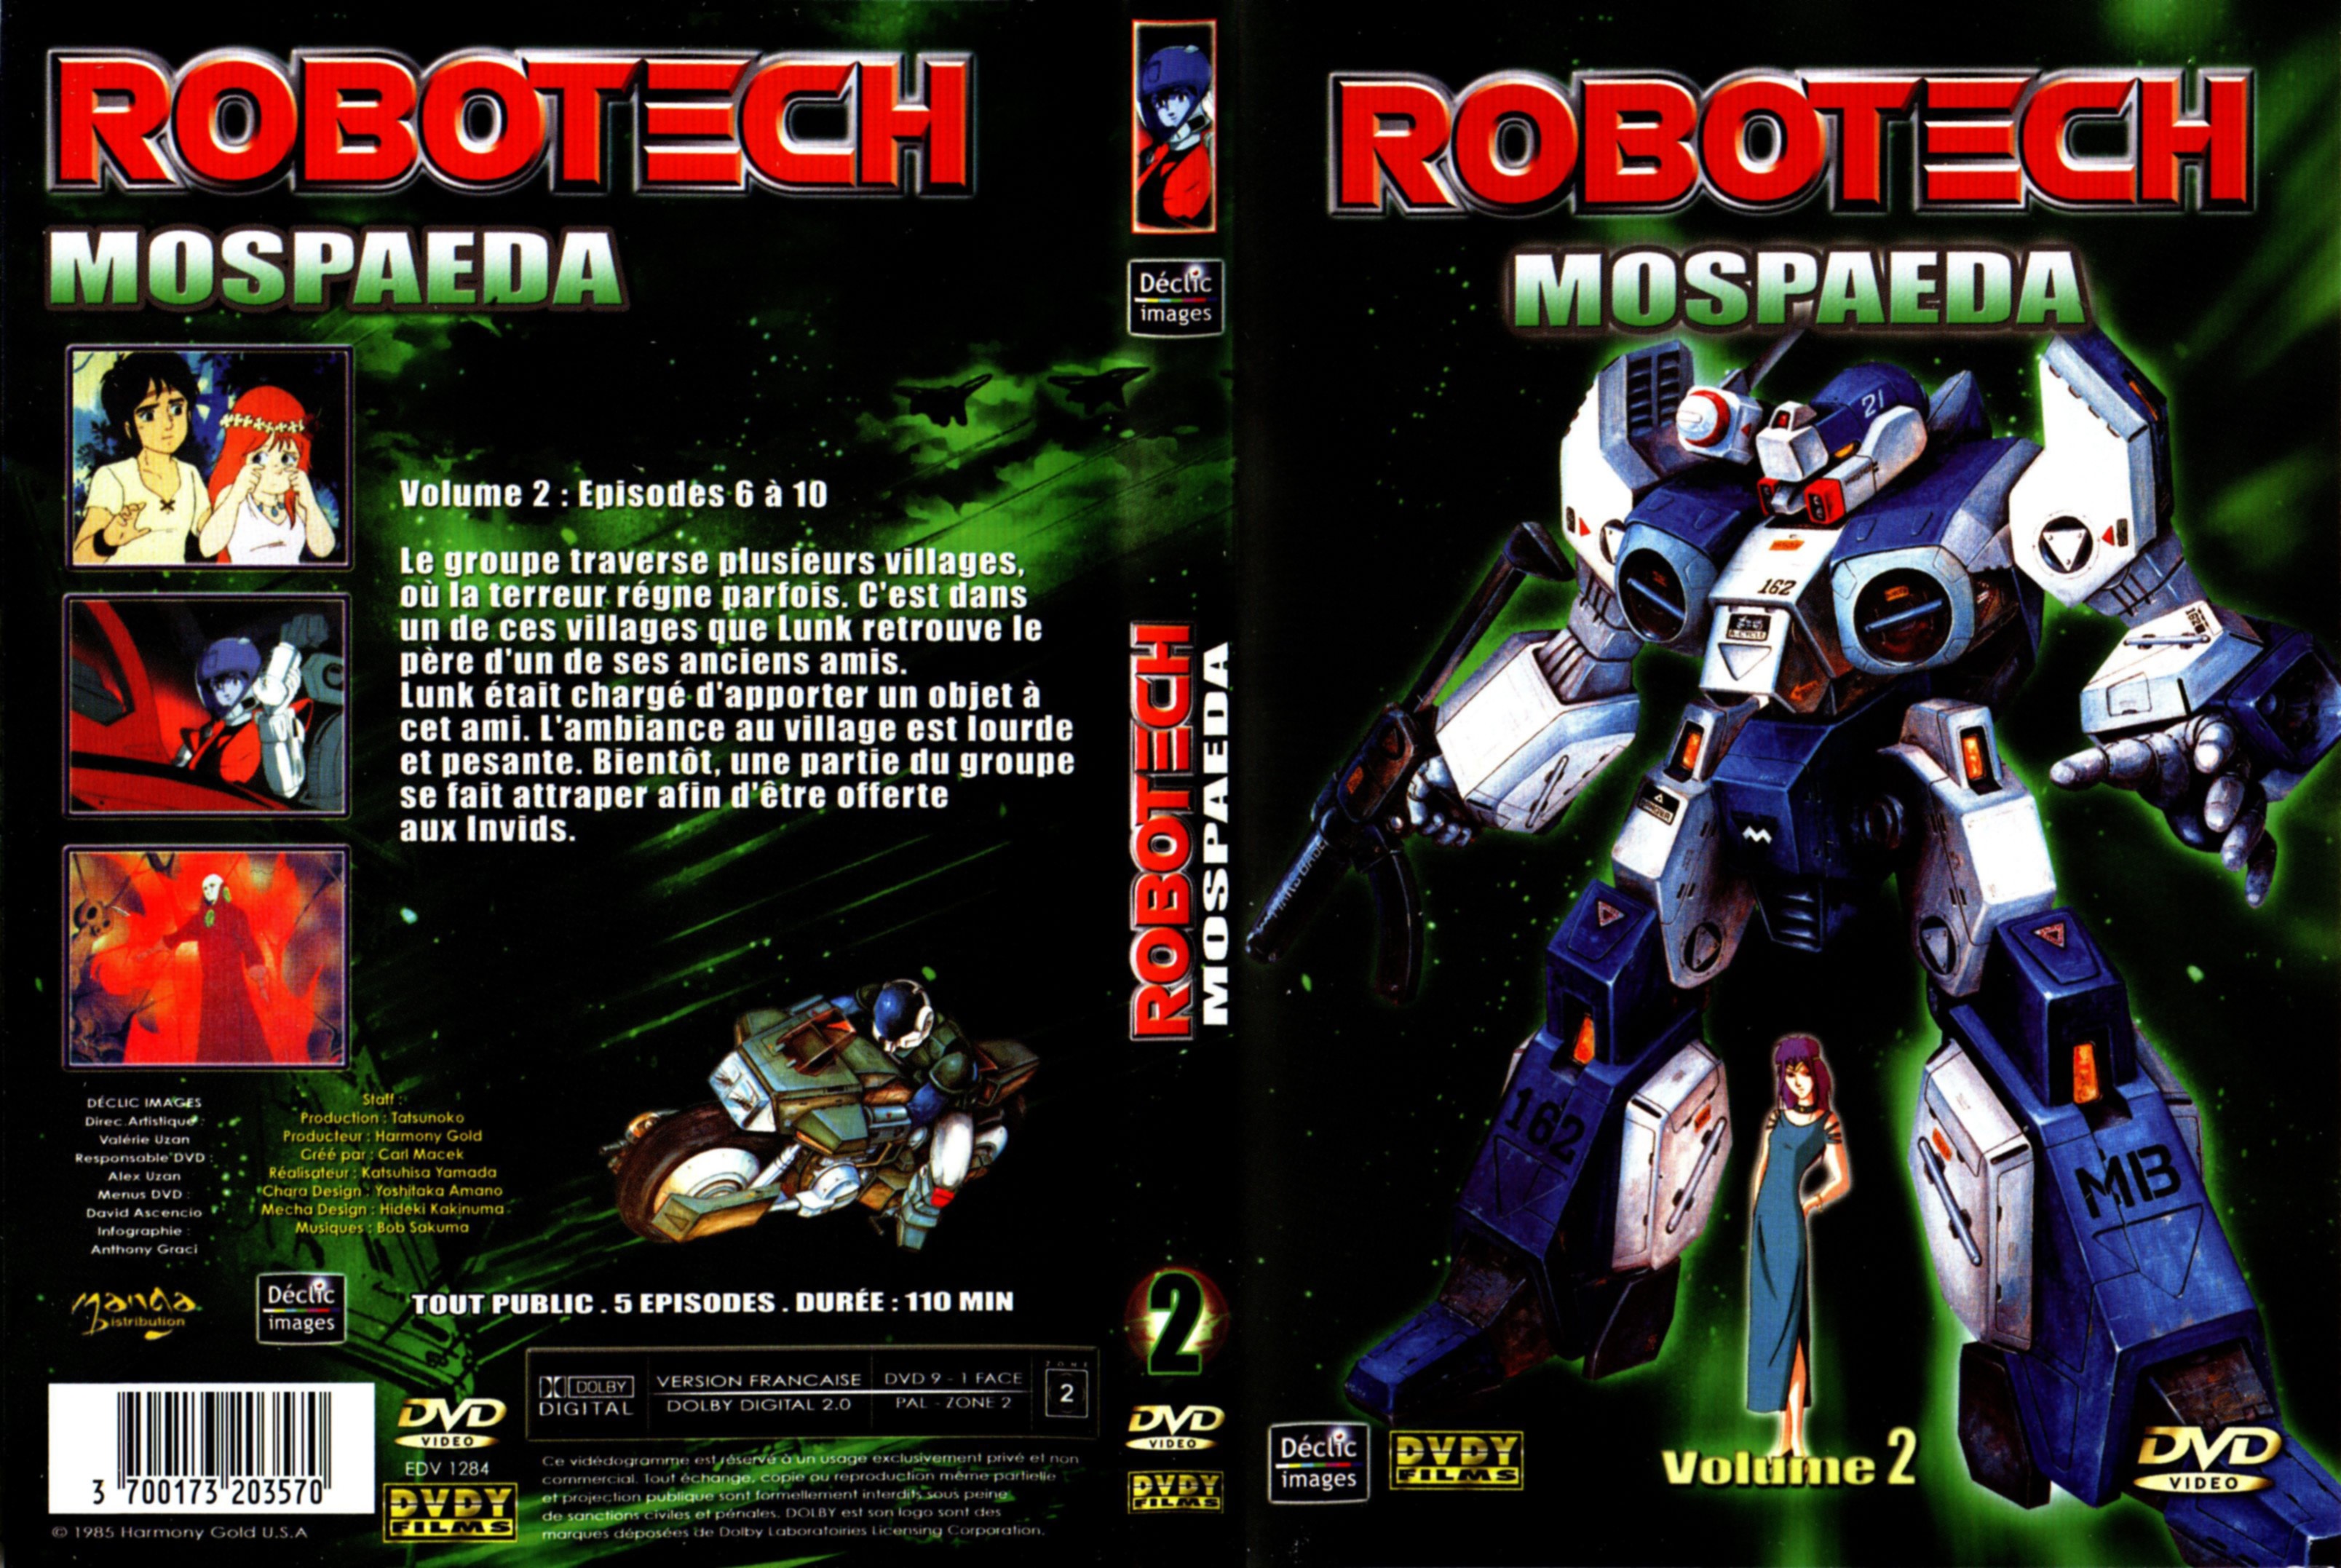 Jaquette DVD Robotech Mospaeda vol 02